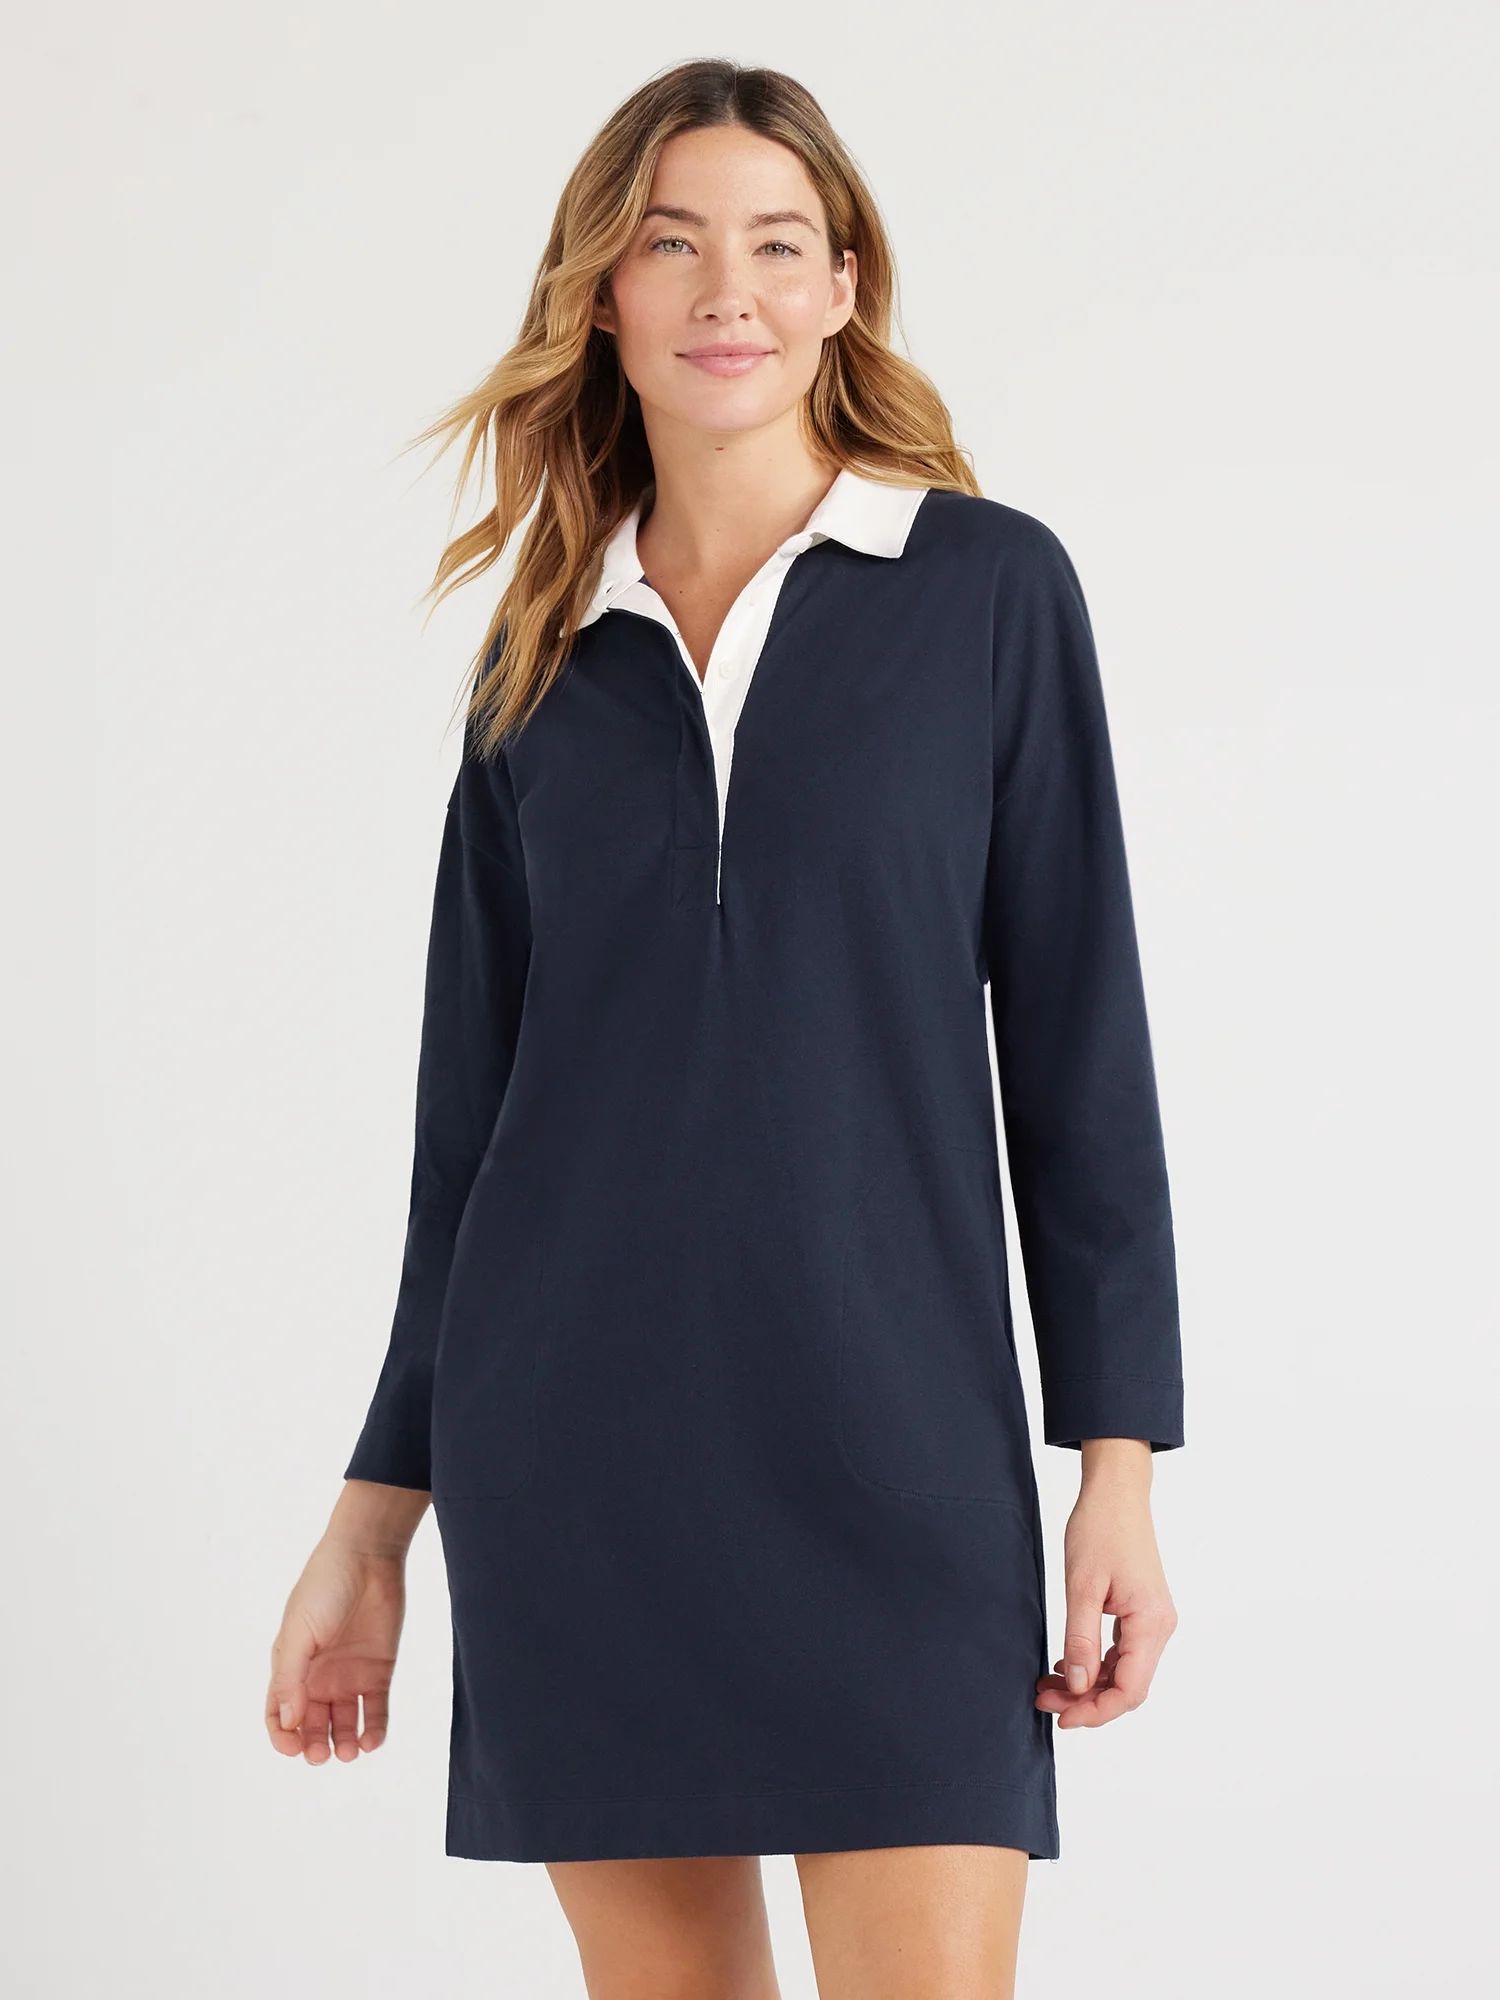 Free Assembly Women?s Polo Mini Dress with Long Sleeves, Sizes XS-XXXL | Walmart (US)